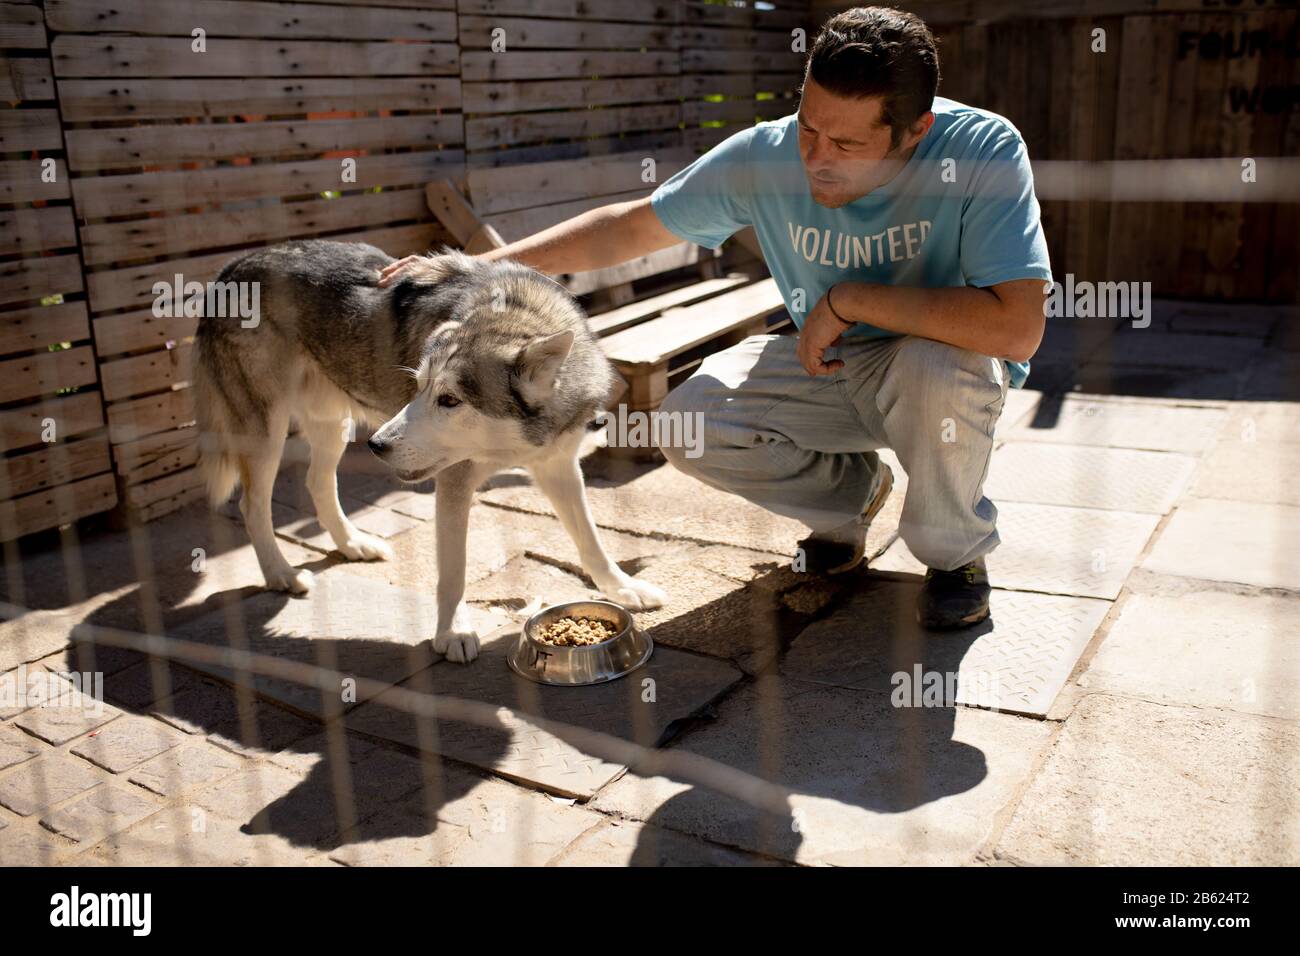 Volunteer feeding a dog in dog shelter Stock Photo - Alamy